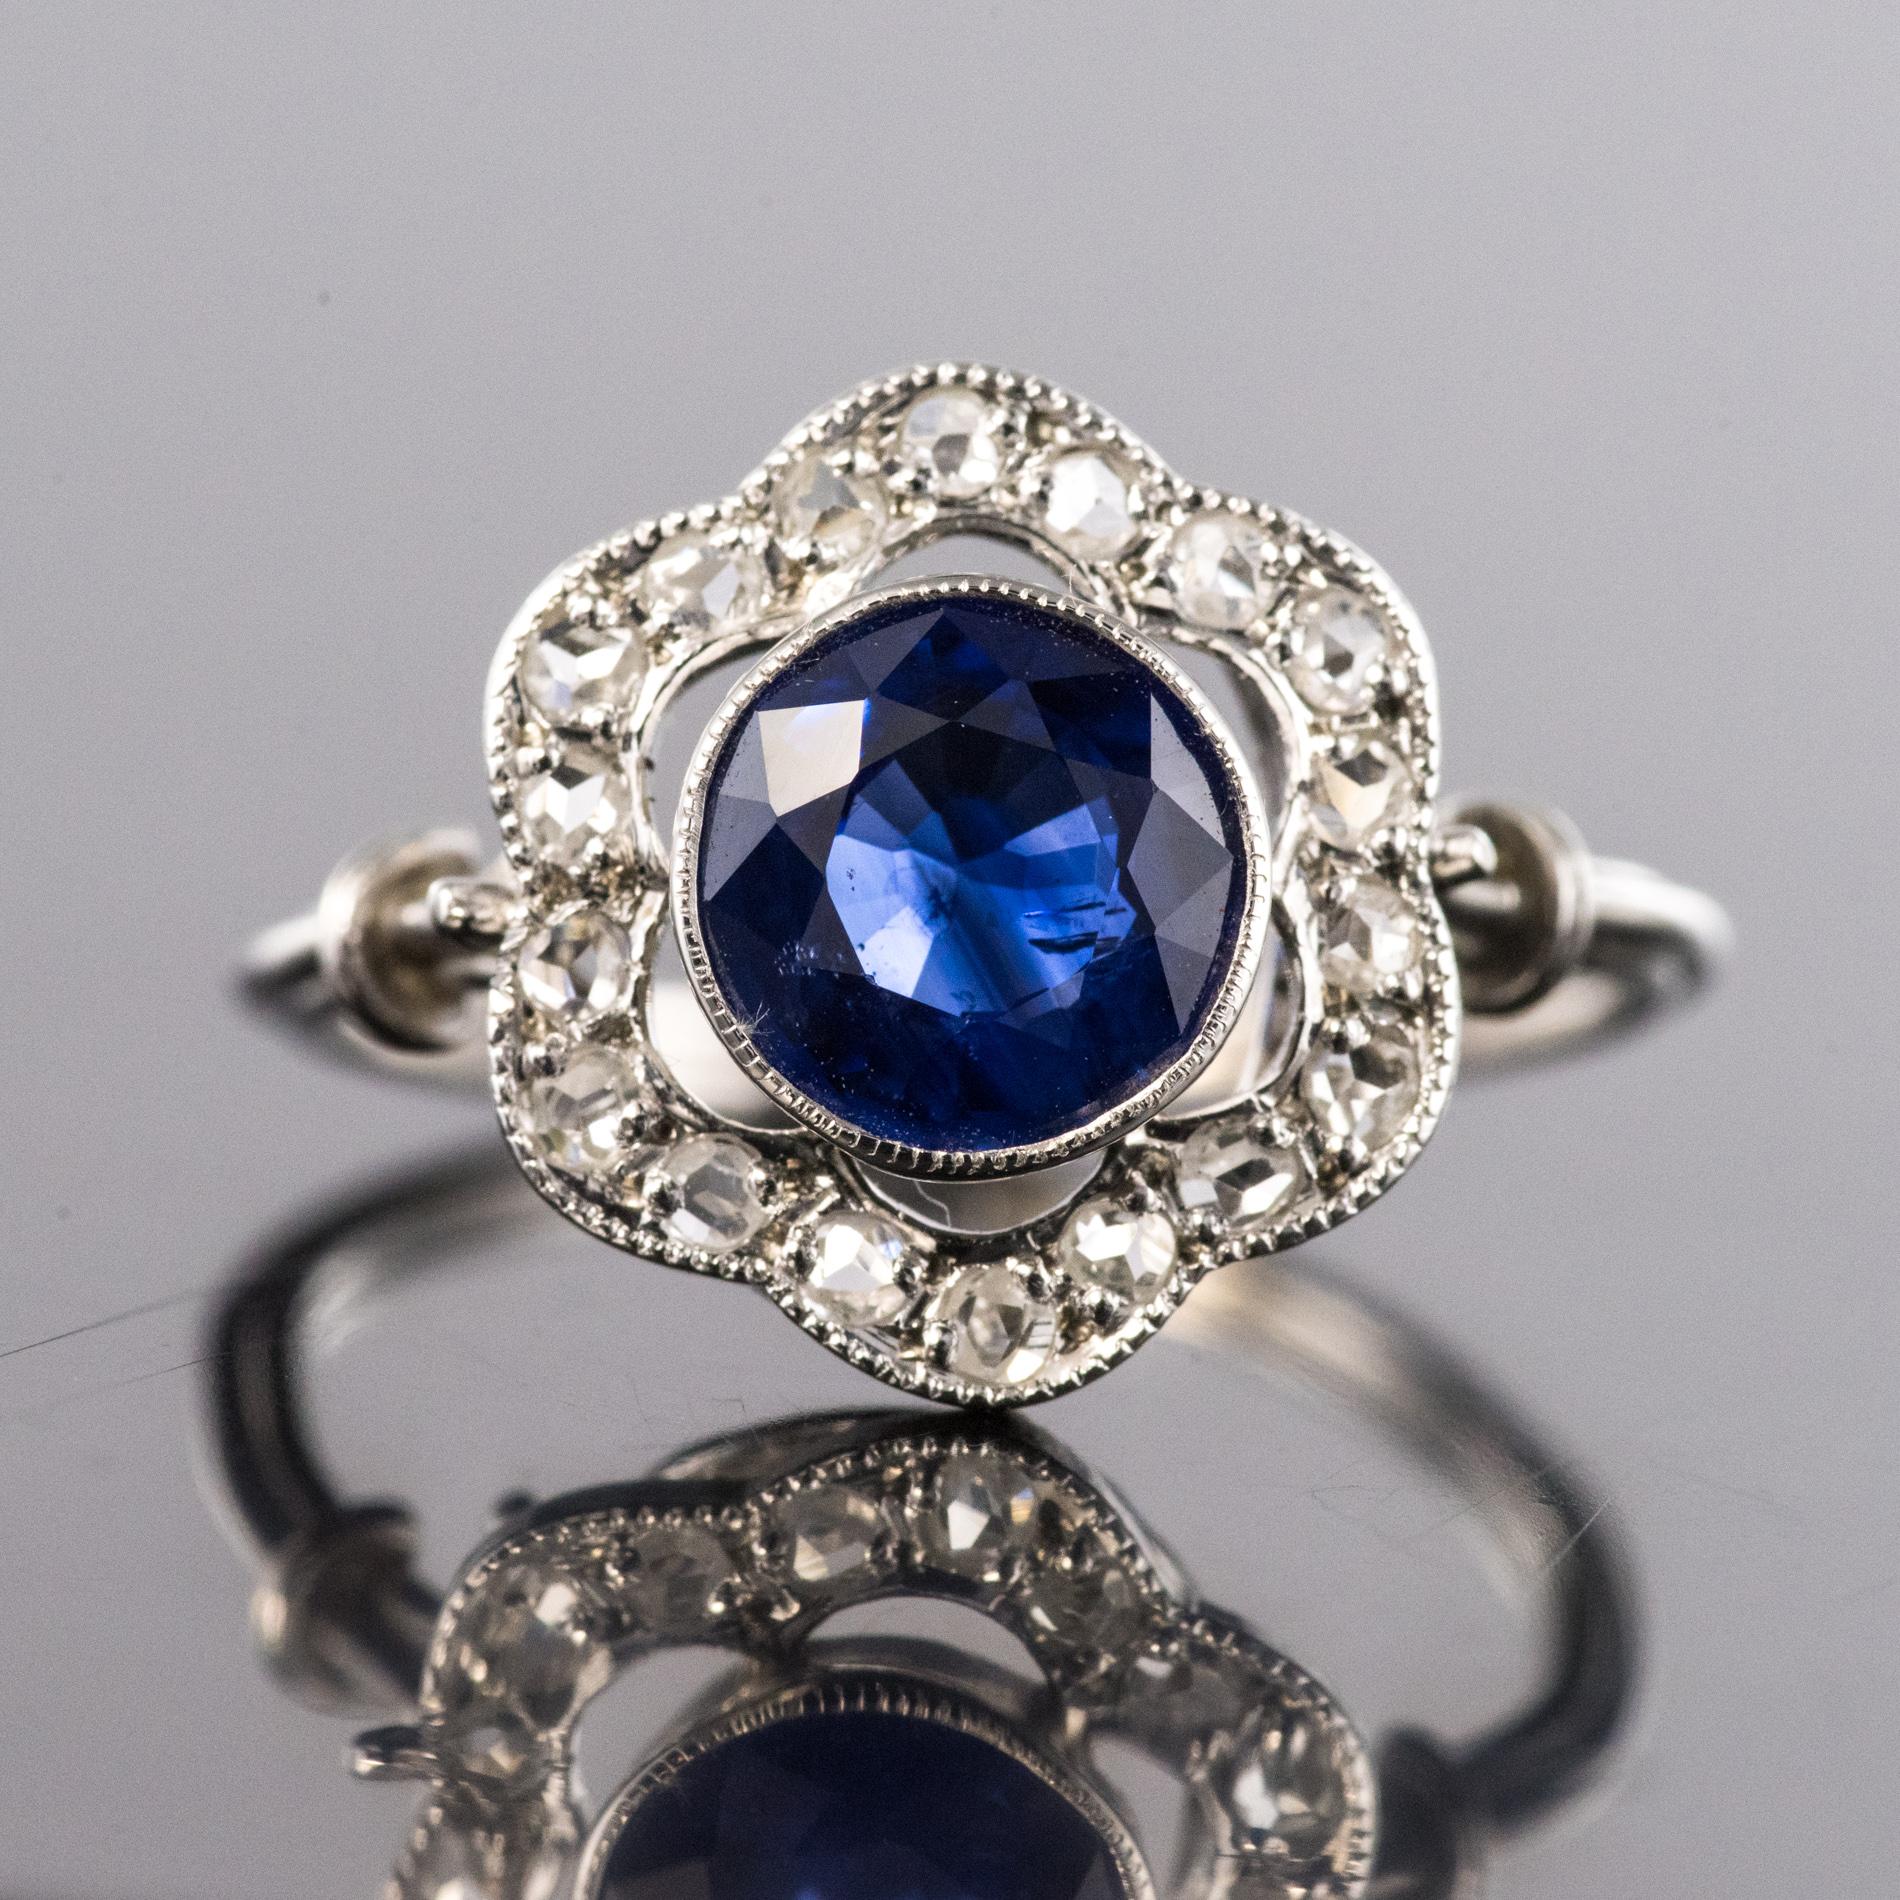 French 1920s Art Deco 1.23 Carat Sapphire Diamonds Platinum Ring 9